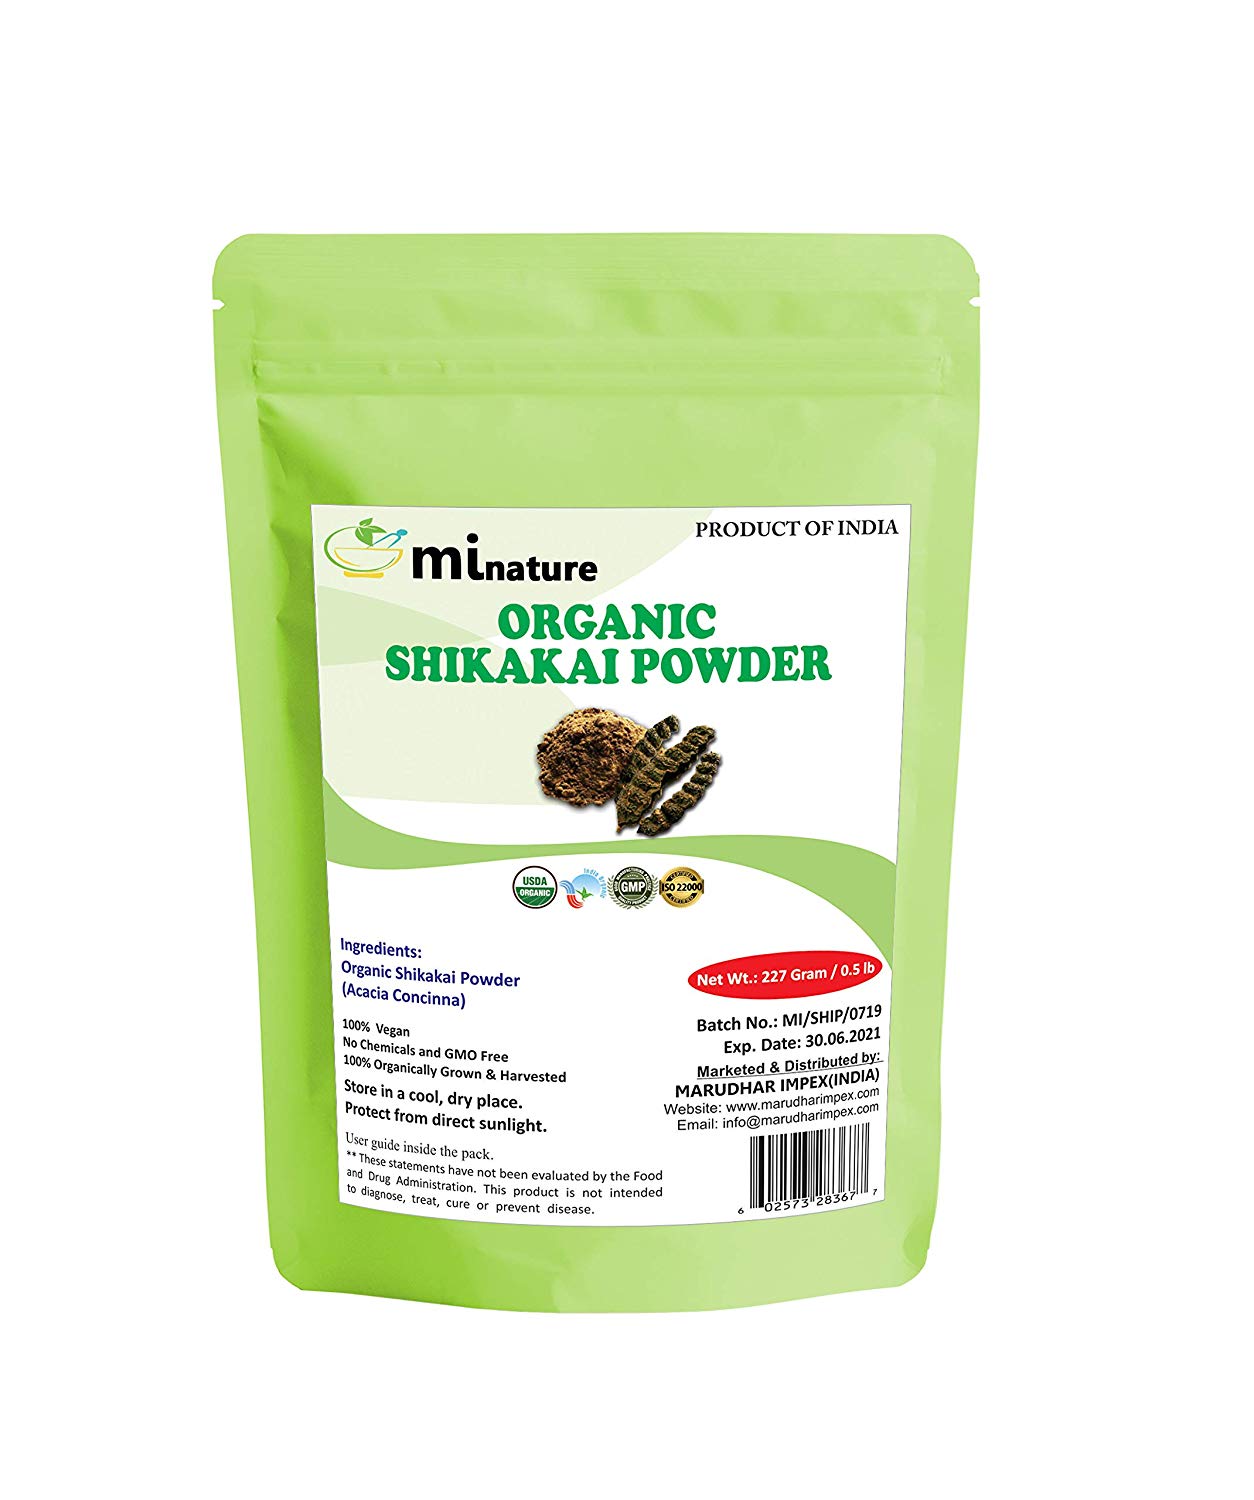 mi nature Organic Shikakai Powder with Resealable Zip Lock Pouch, 227 g